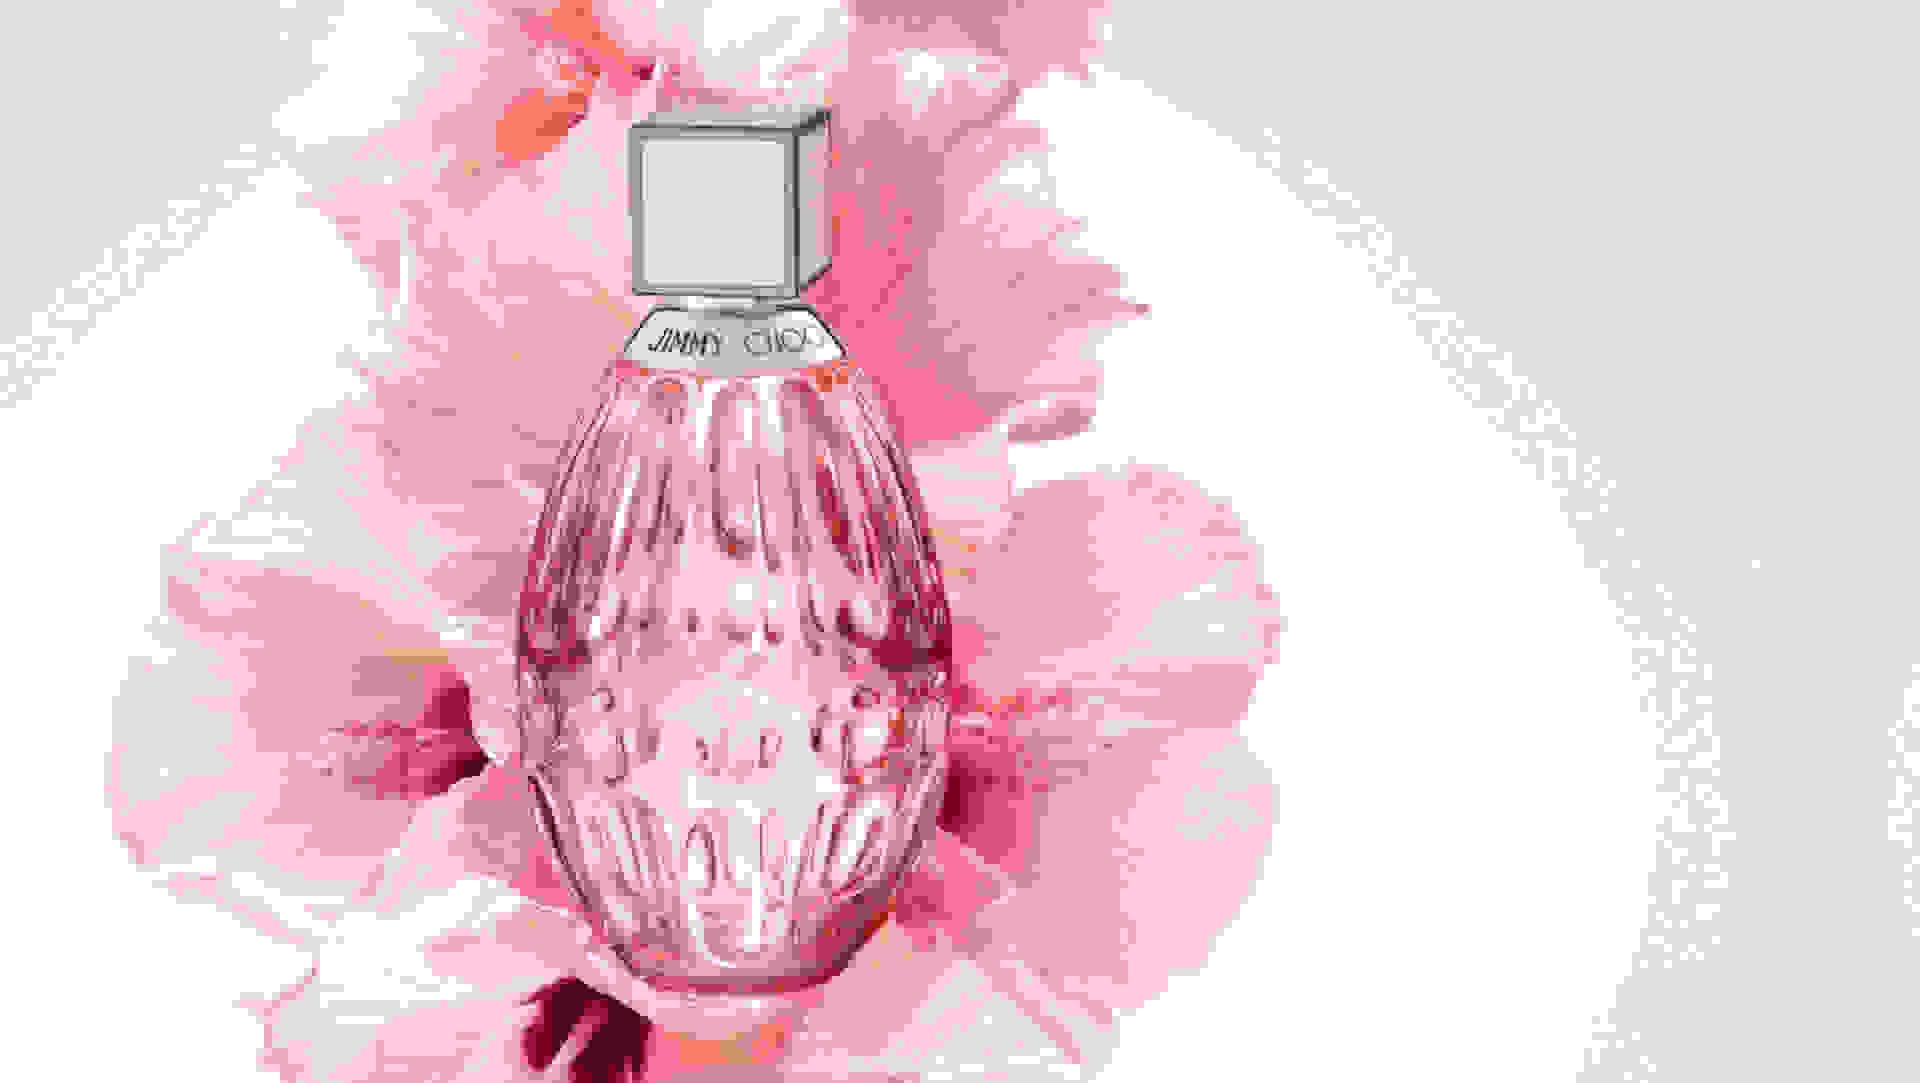 Jimmy Choo: L'EAU fragrance